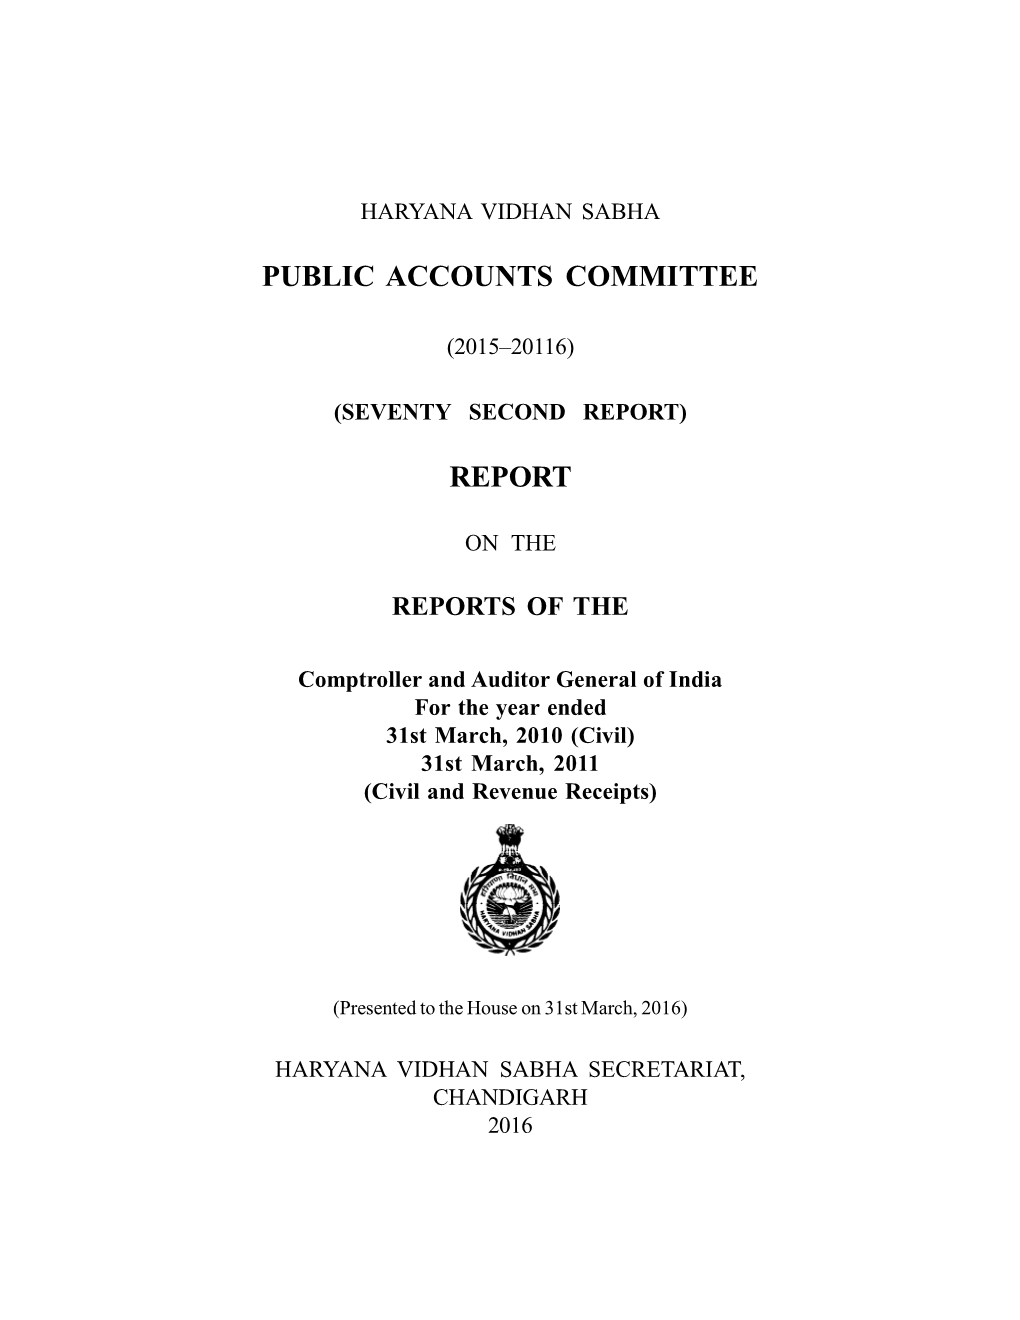 Public Accounts Committee Report